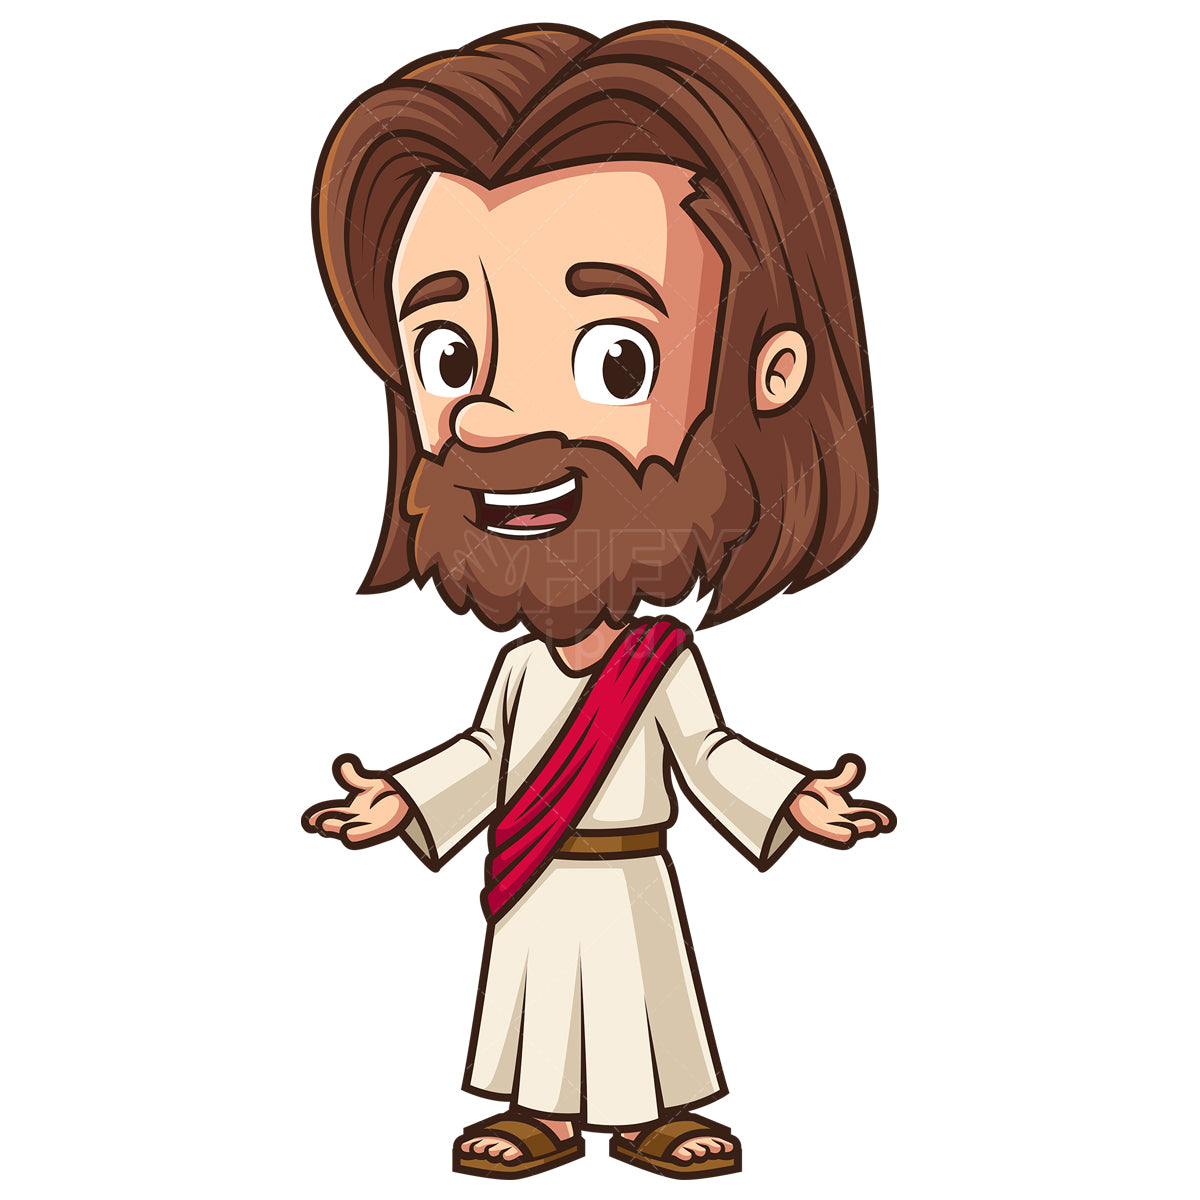 Royalty-free stock vector illustration of a kawaii Jesus welcoming everyone.